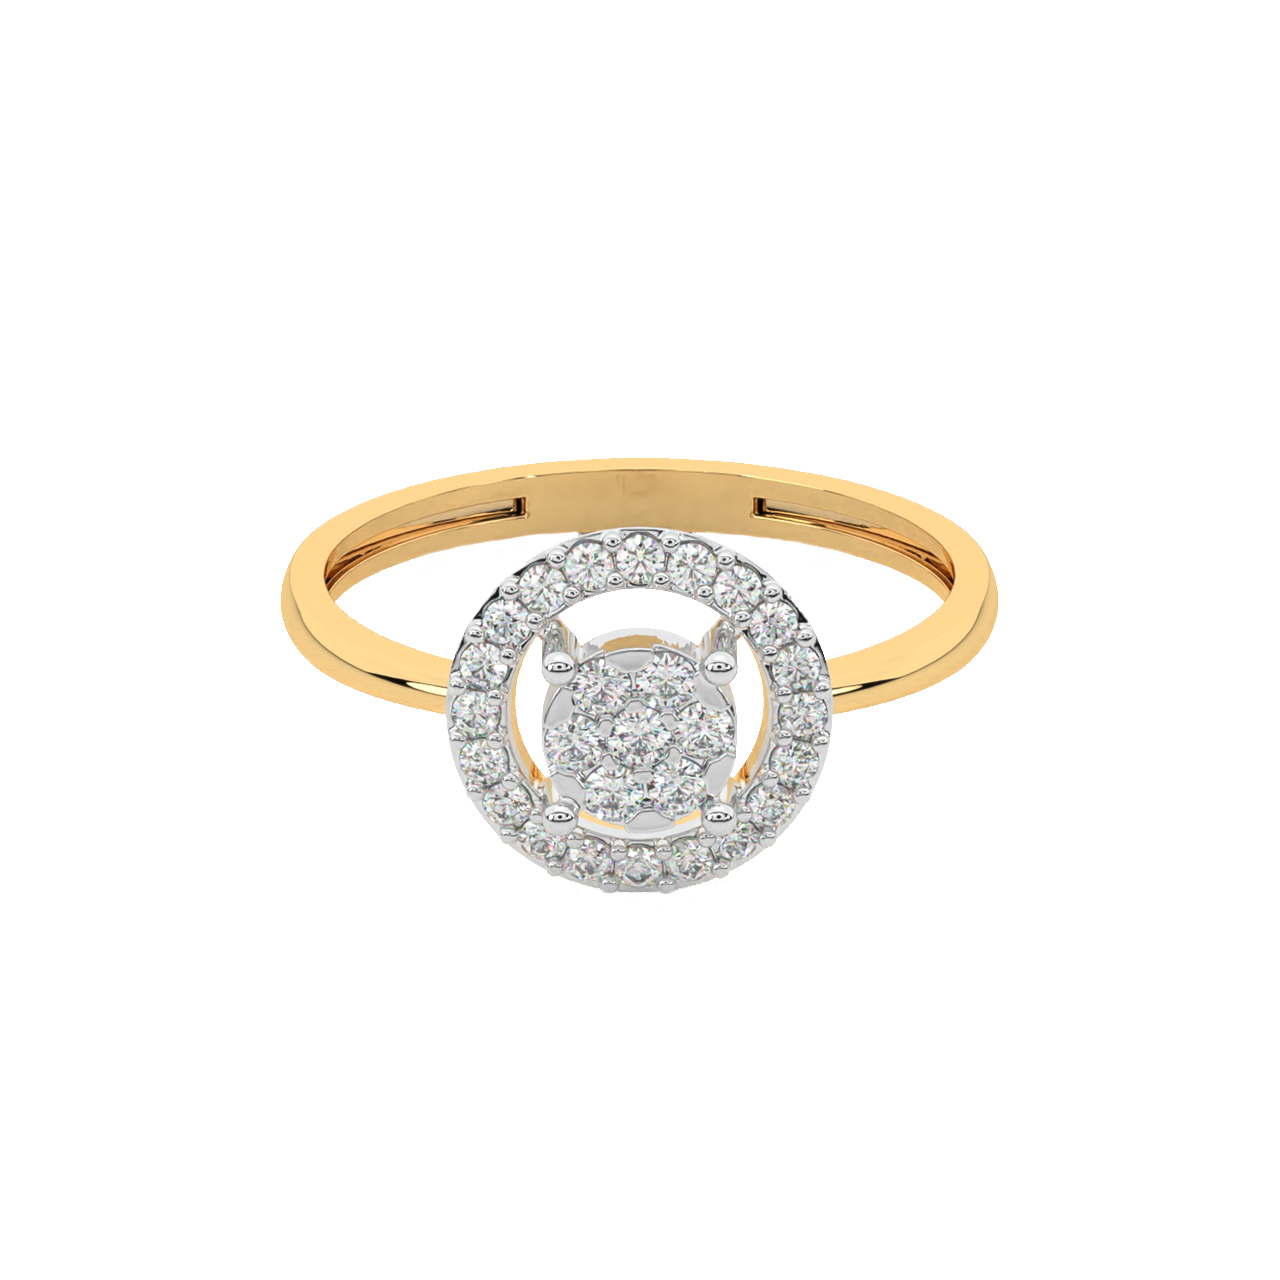 Chaim Diamond Cocktail Ring